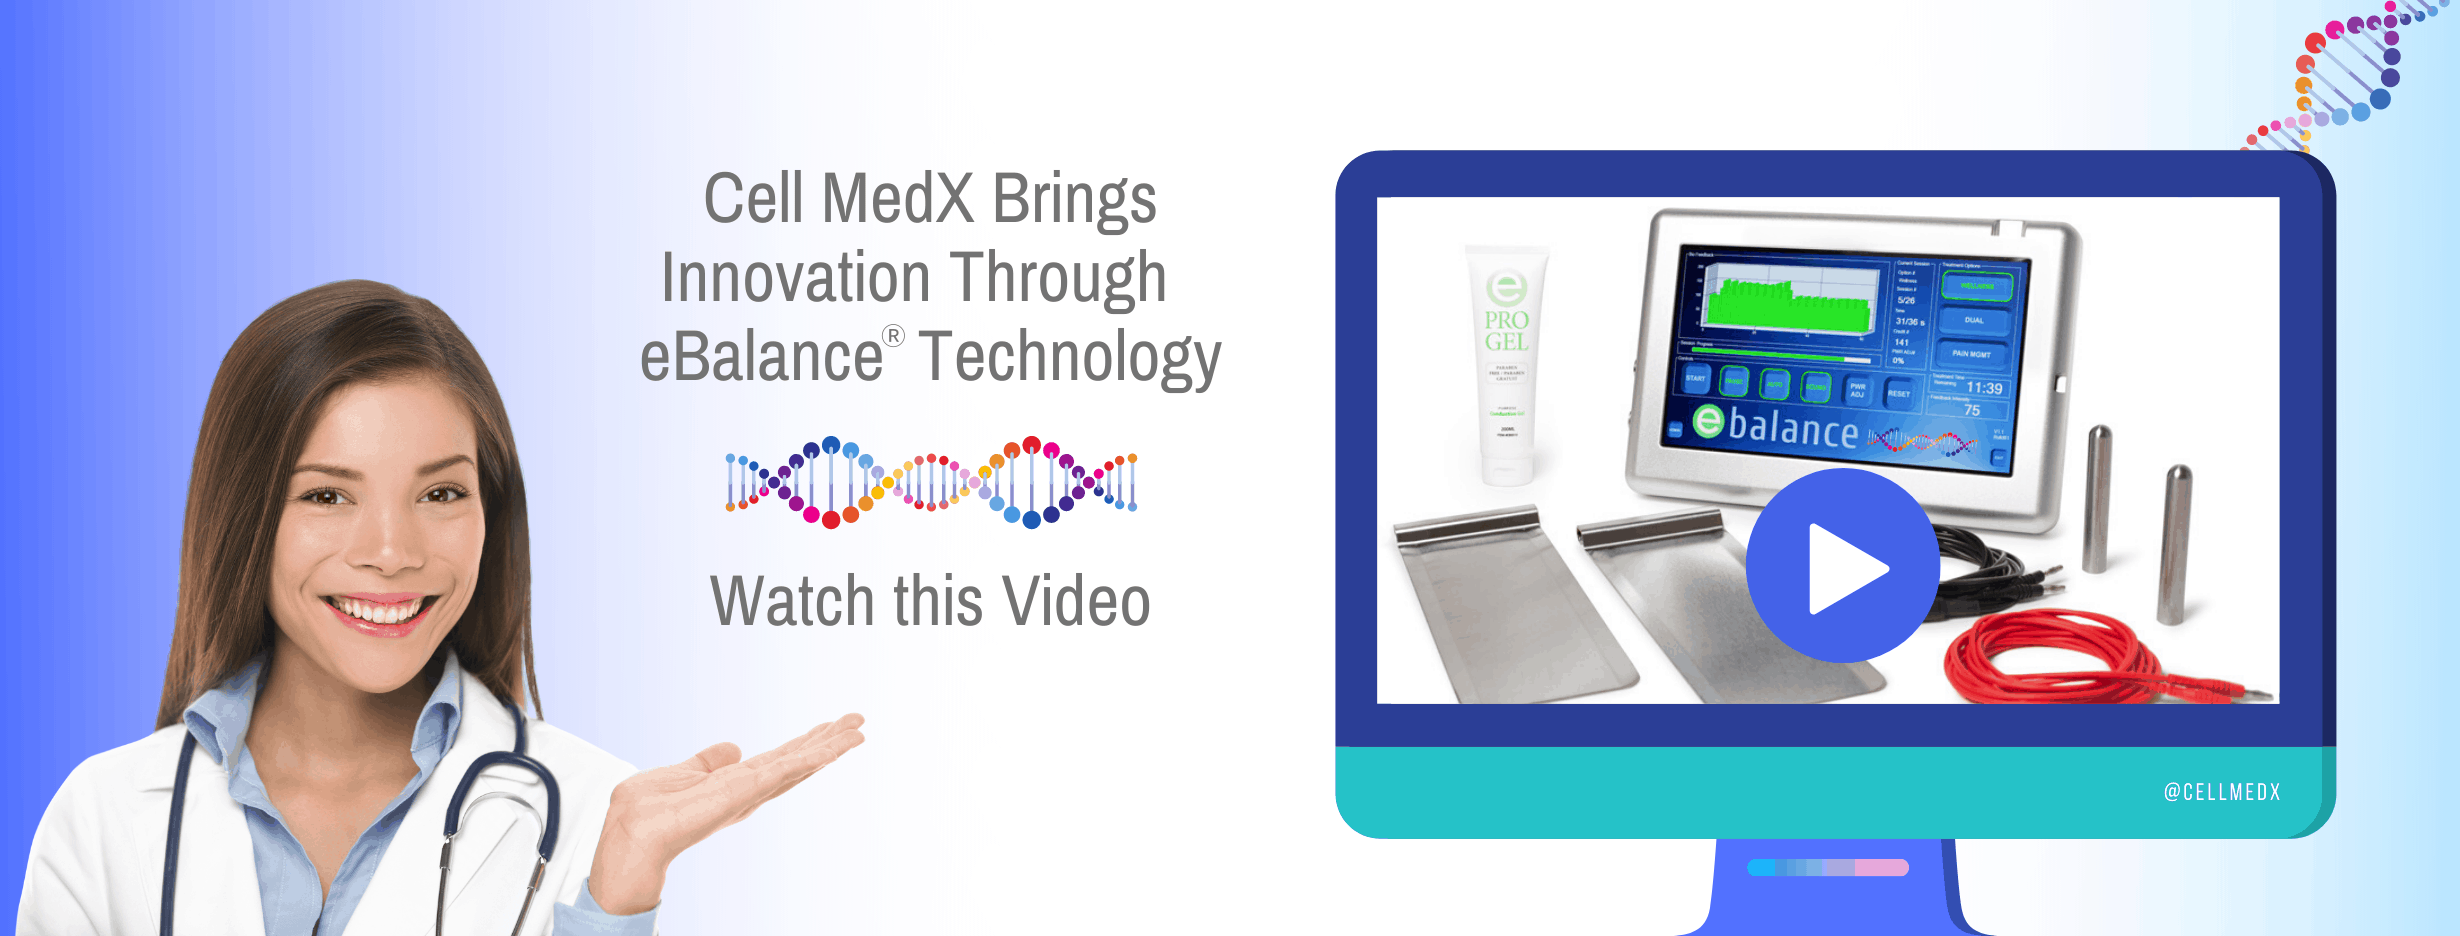 Cell MedX brings Innovation Through eBalance Technology